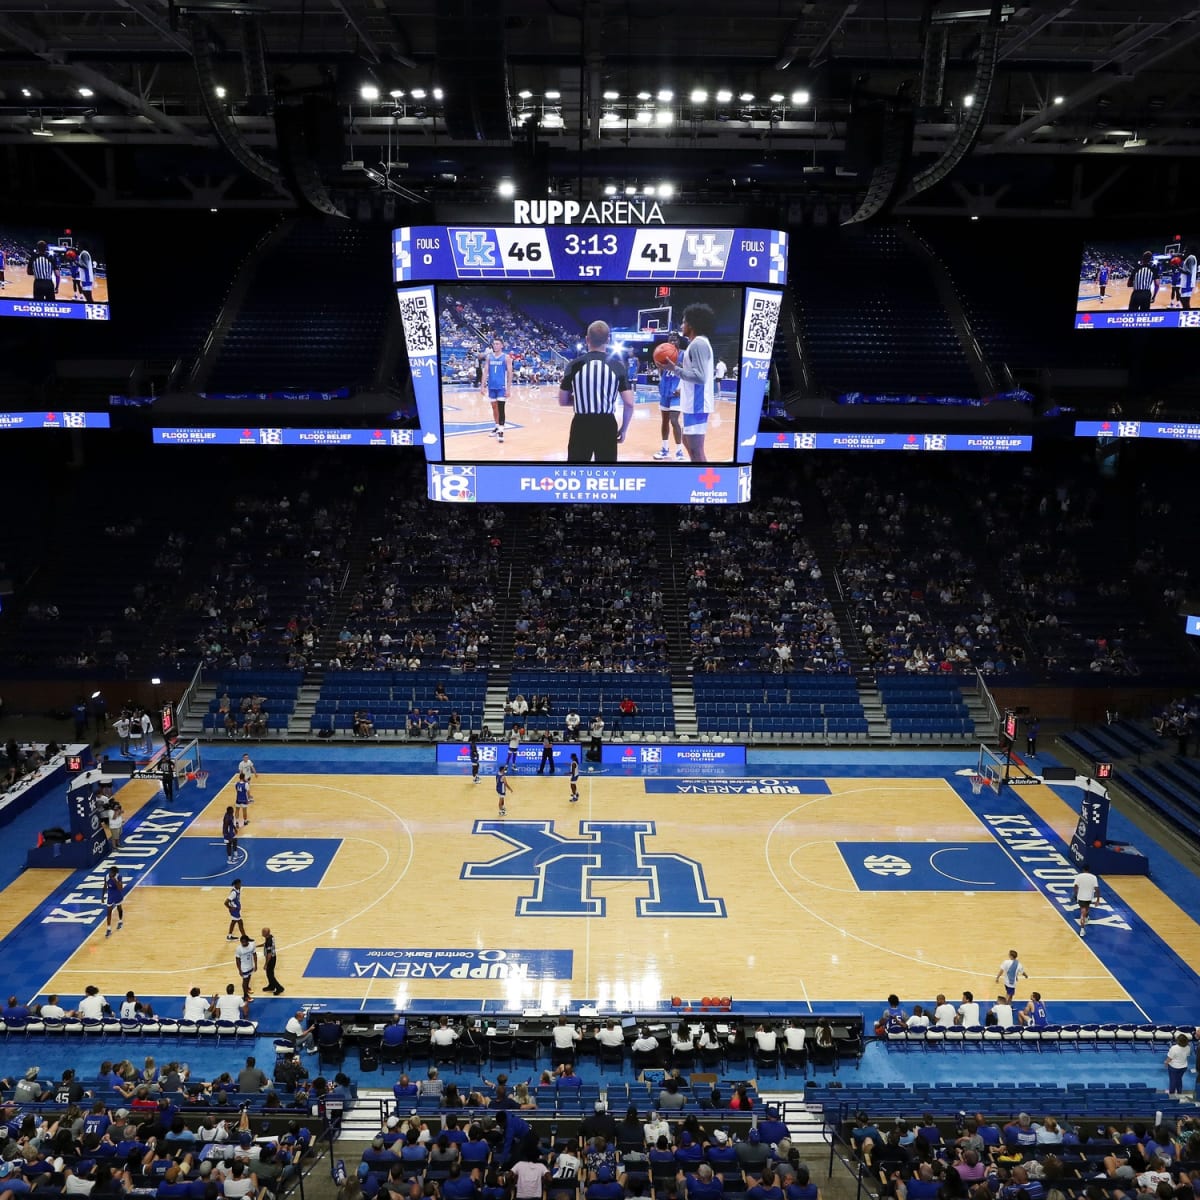 Kentucky Basketball black jerseys unveiled - A Sea Of Blue